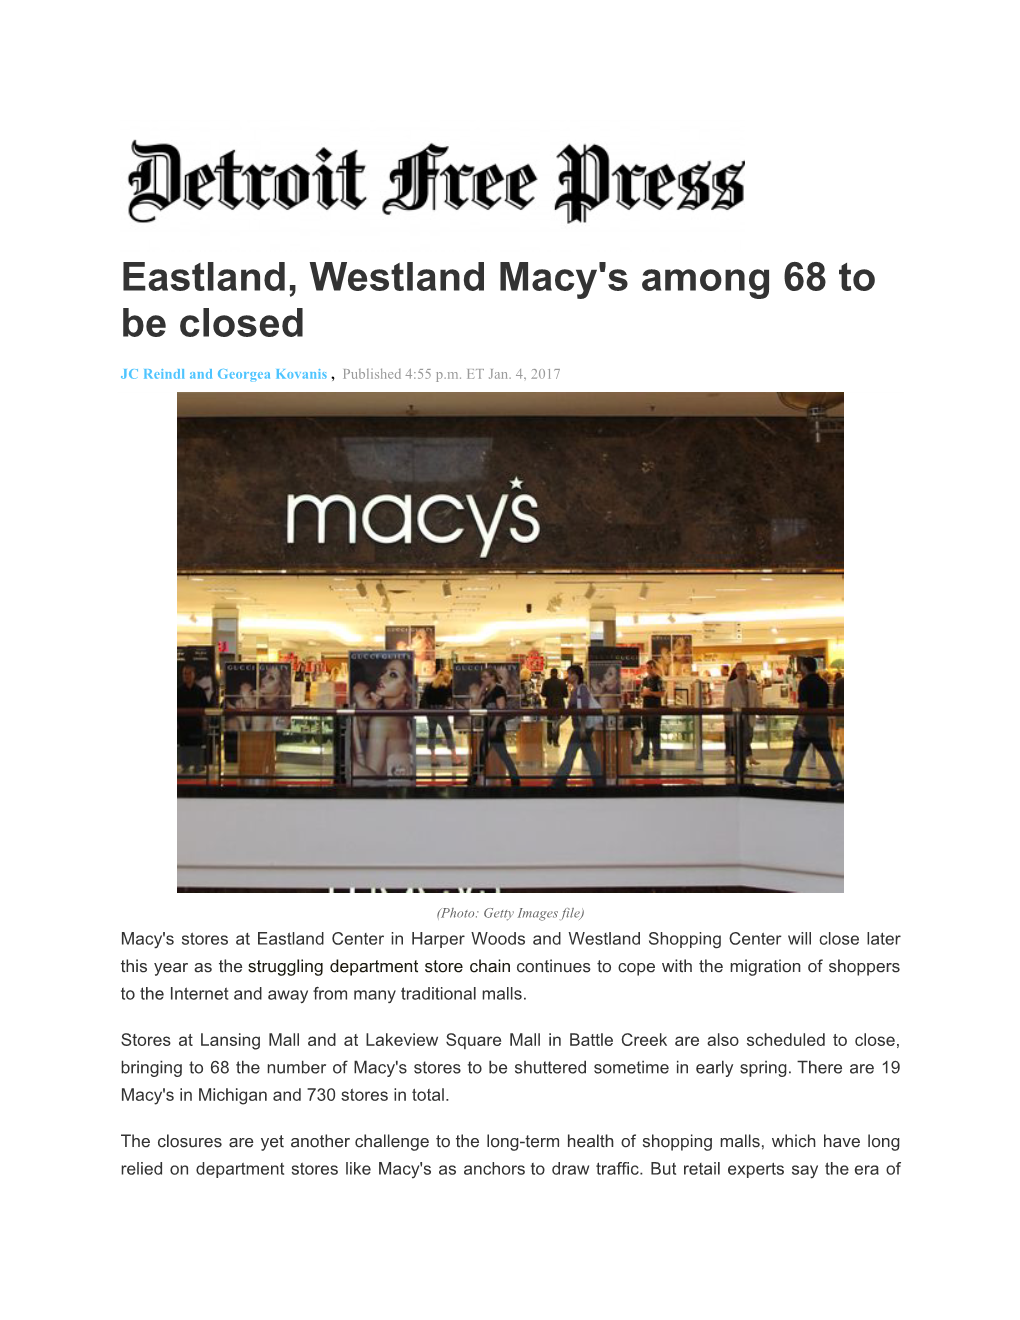 Eastland, Westland Macy's Among 68 to Be Closed